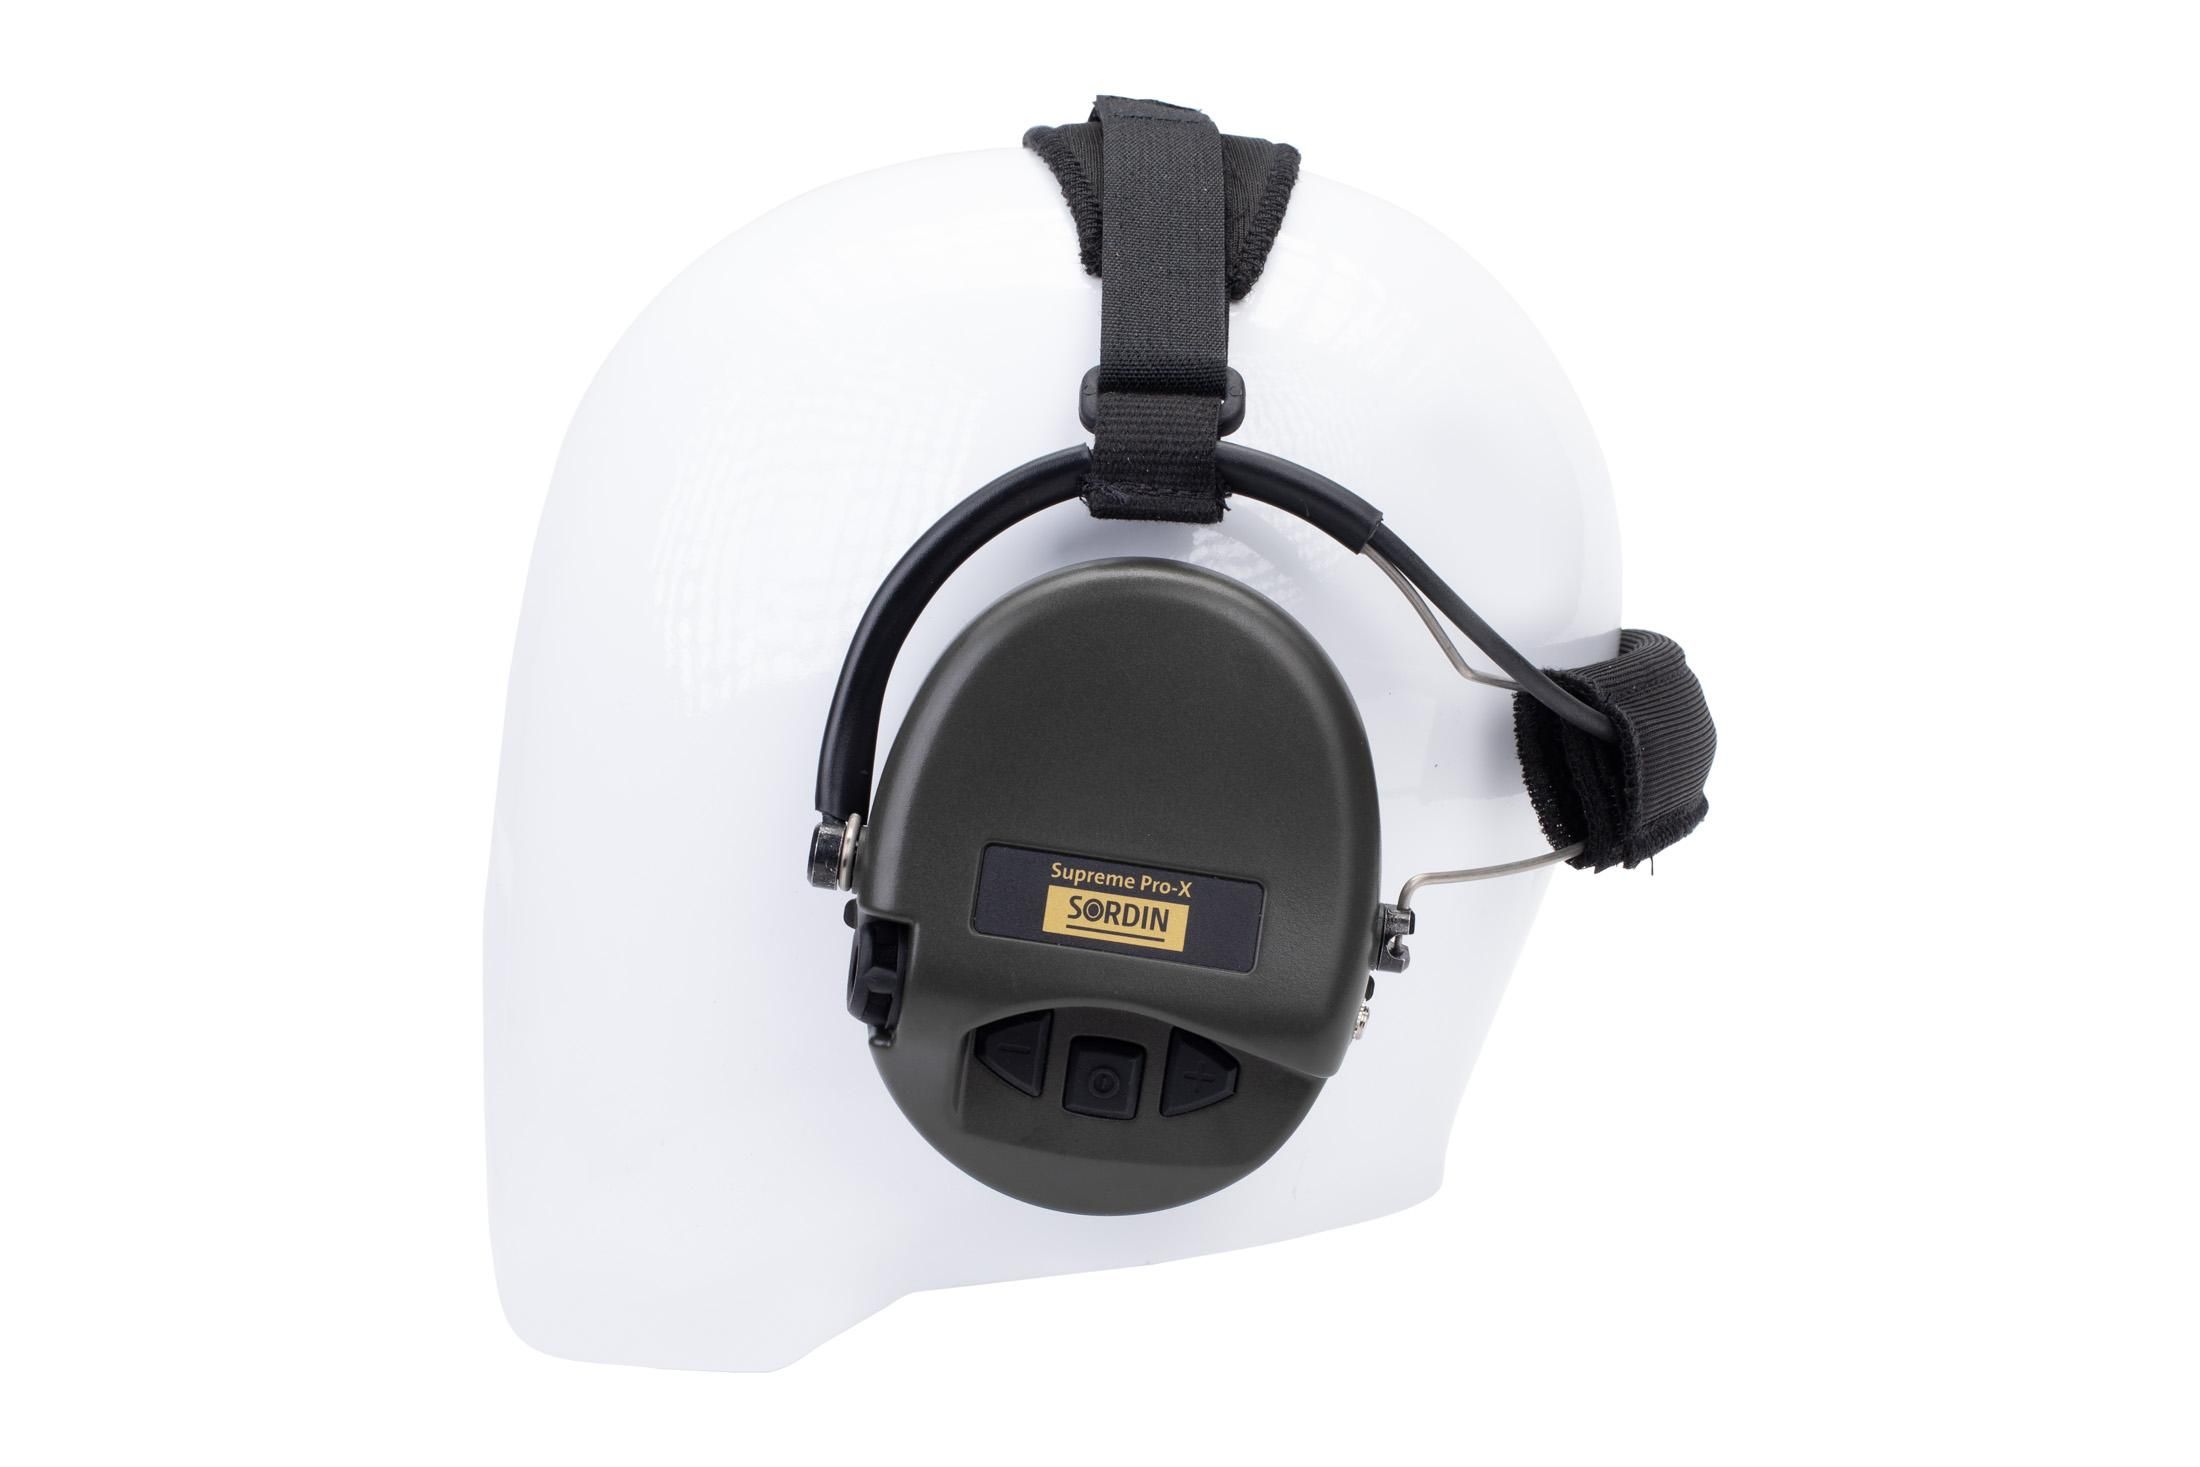 Sordin Supreme Pro-X Hearing Protection - Neckband - Black PVC